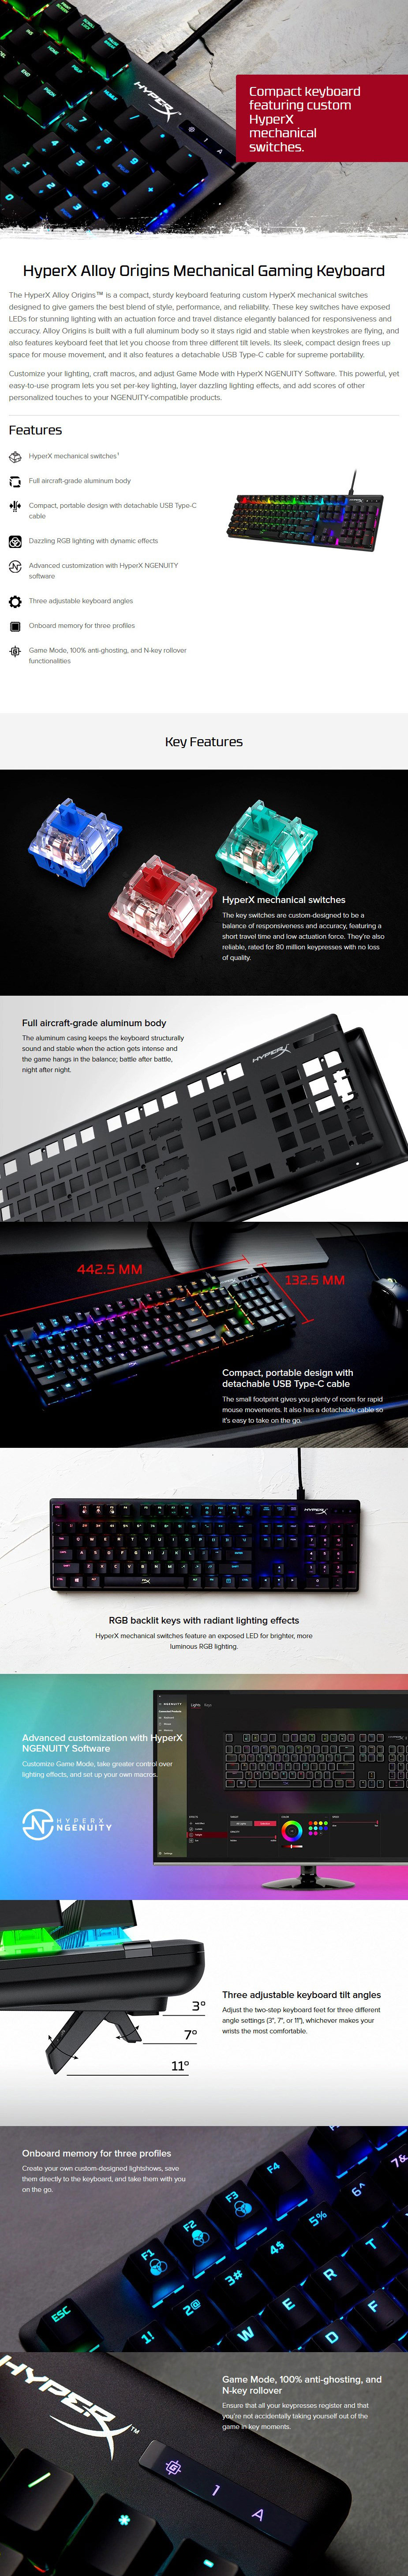 Kingston HyperX Alloy Origins Mechanical Gaming Keyboard - HyperX Red Switch HX-KB6RDX-US Details